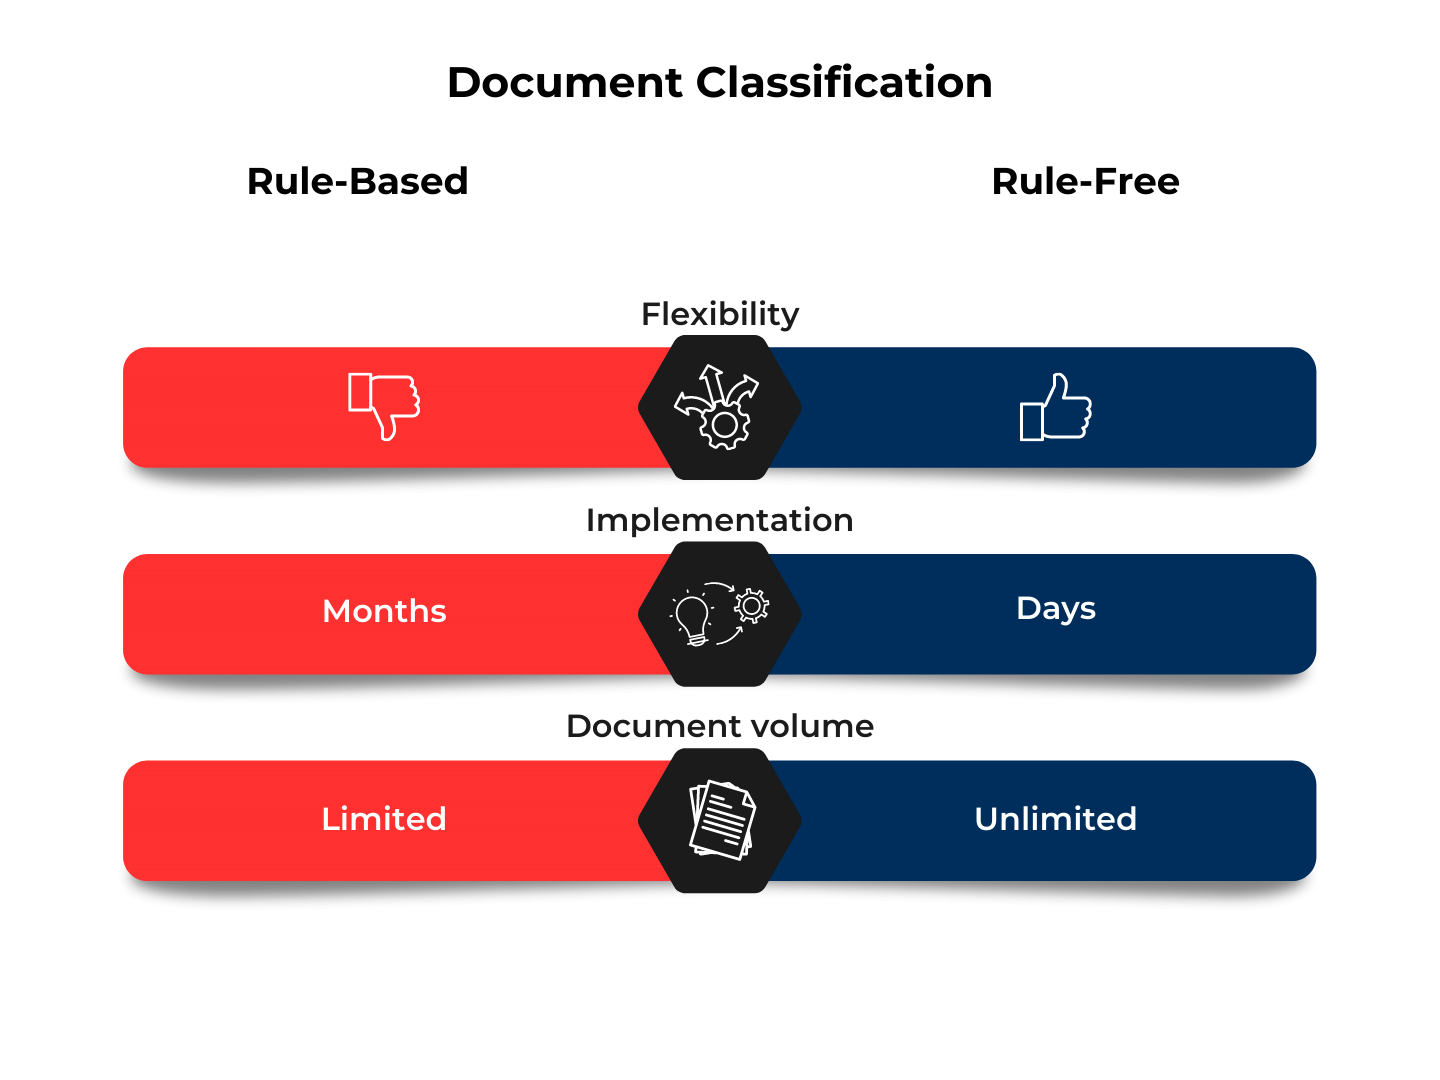 Vergleich Regelbasierte vs. Regelfreie Document Classification